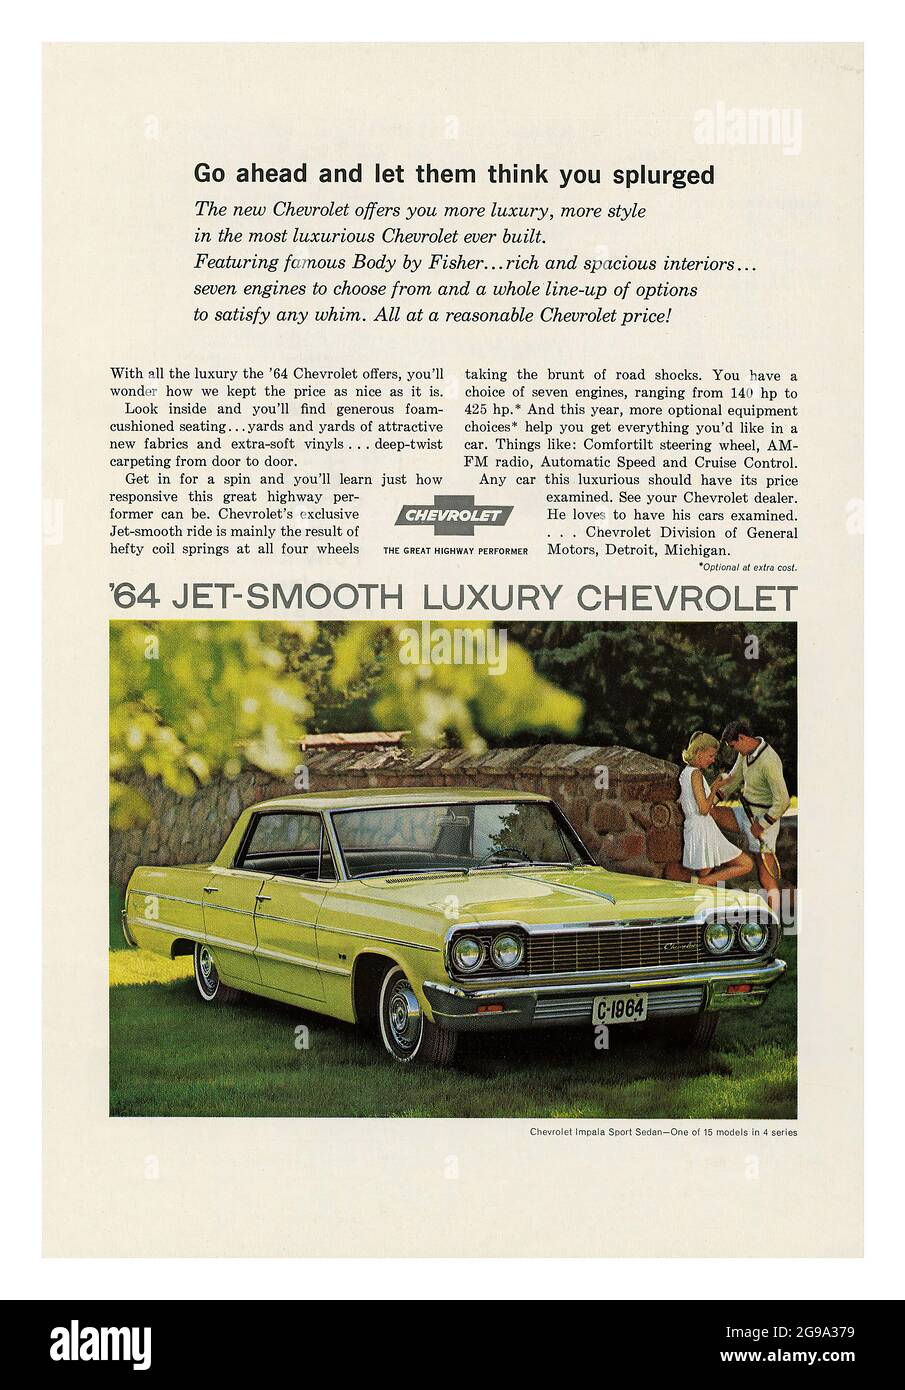 1964 Chevrolet Impala Sports Sedan - Vintage advertising of classic American car Stock Photo